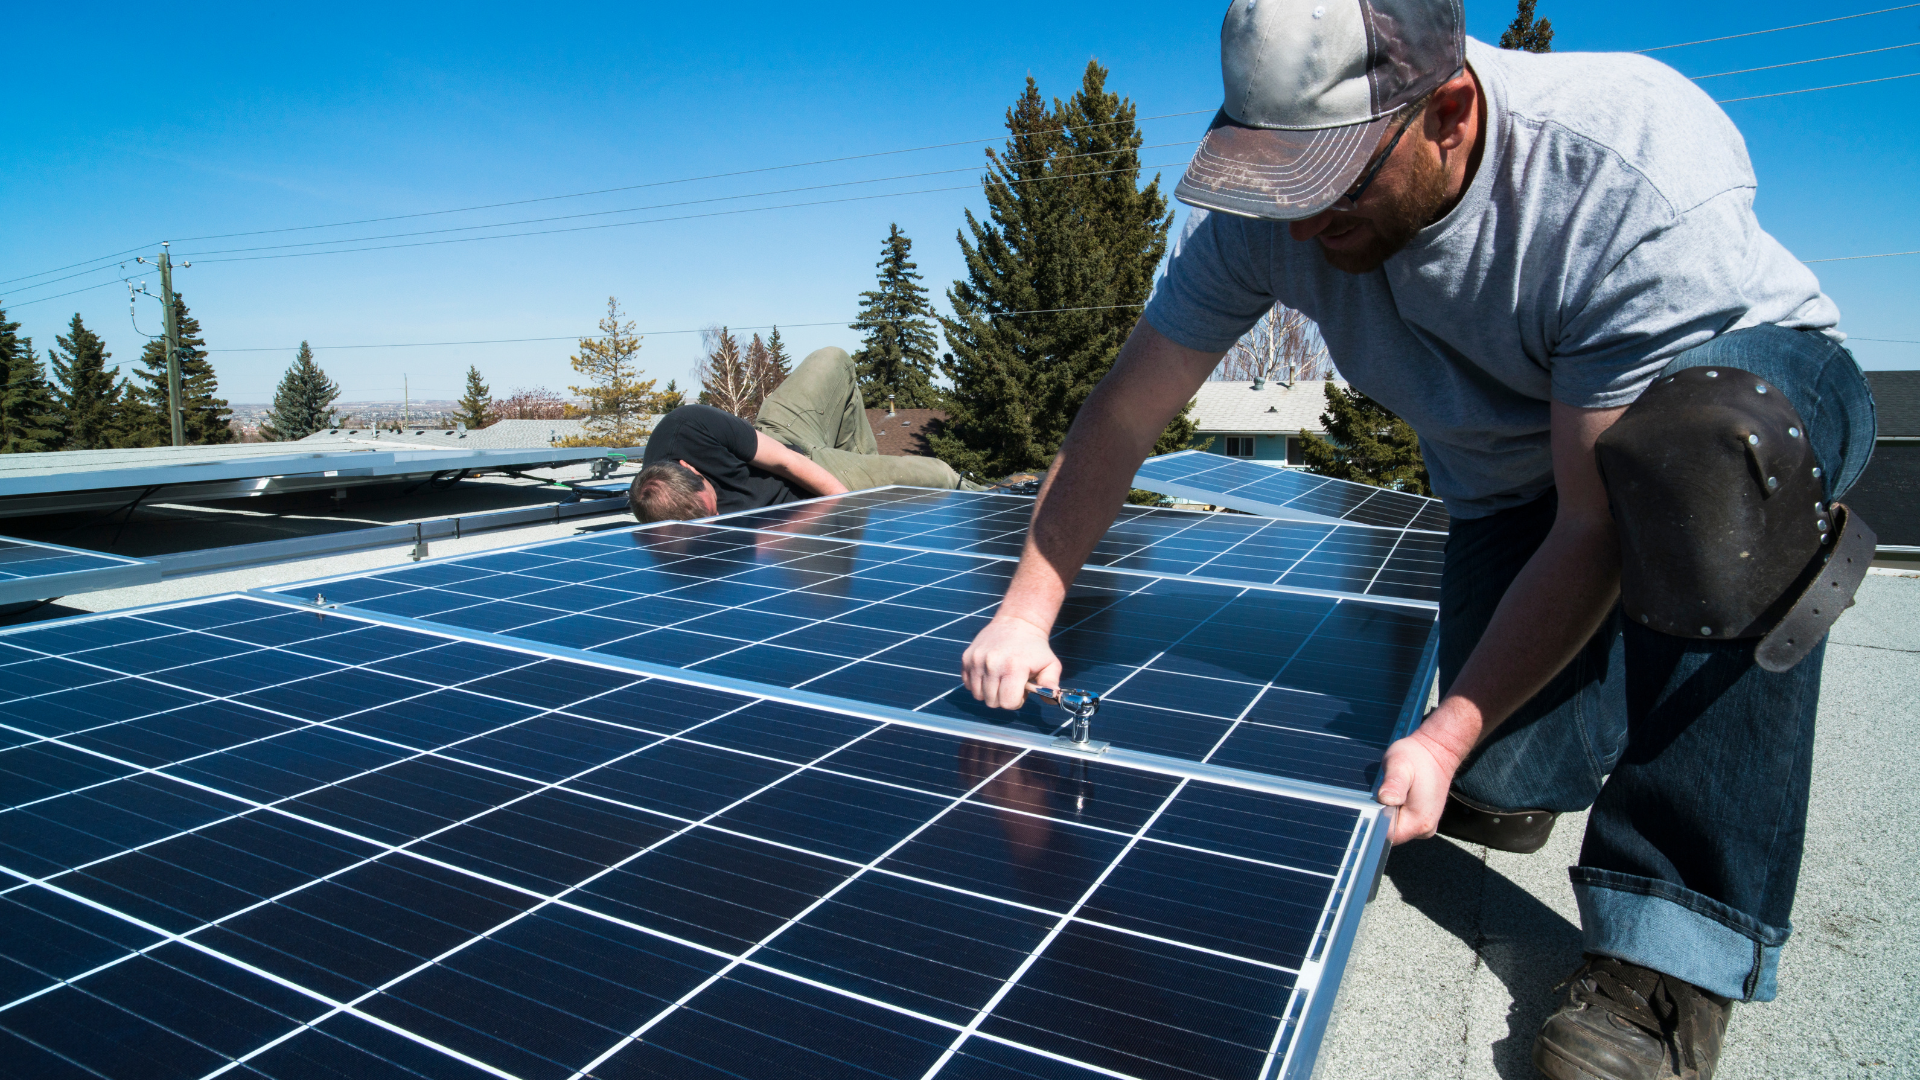 solar installer putting solar panels on new roof in orange county